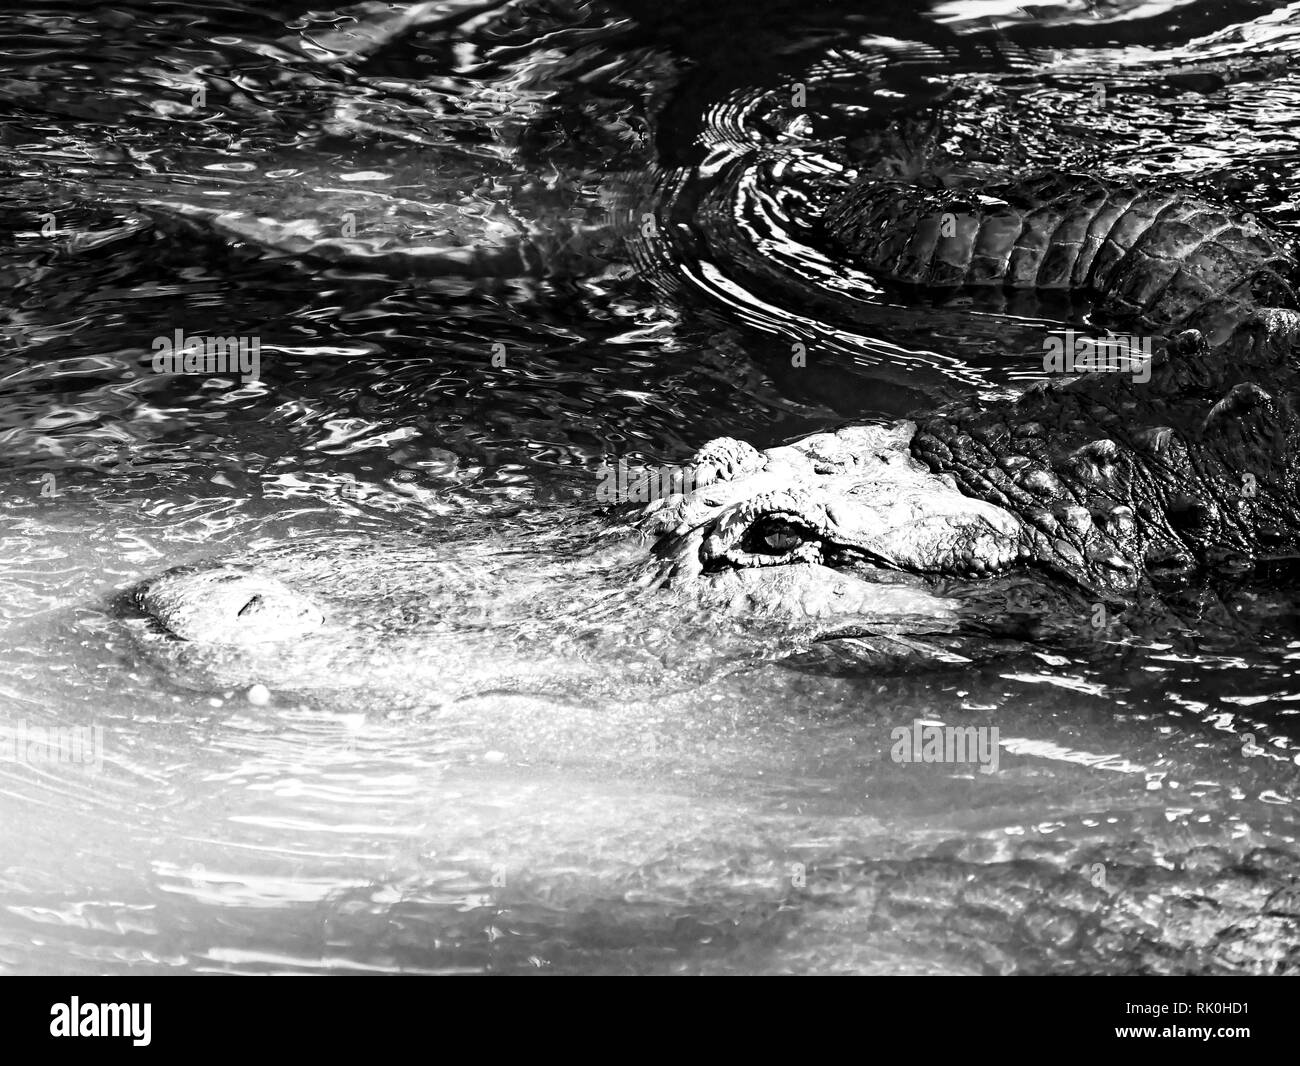 sea alligator black white Stock Photo